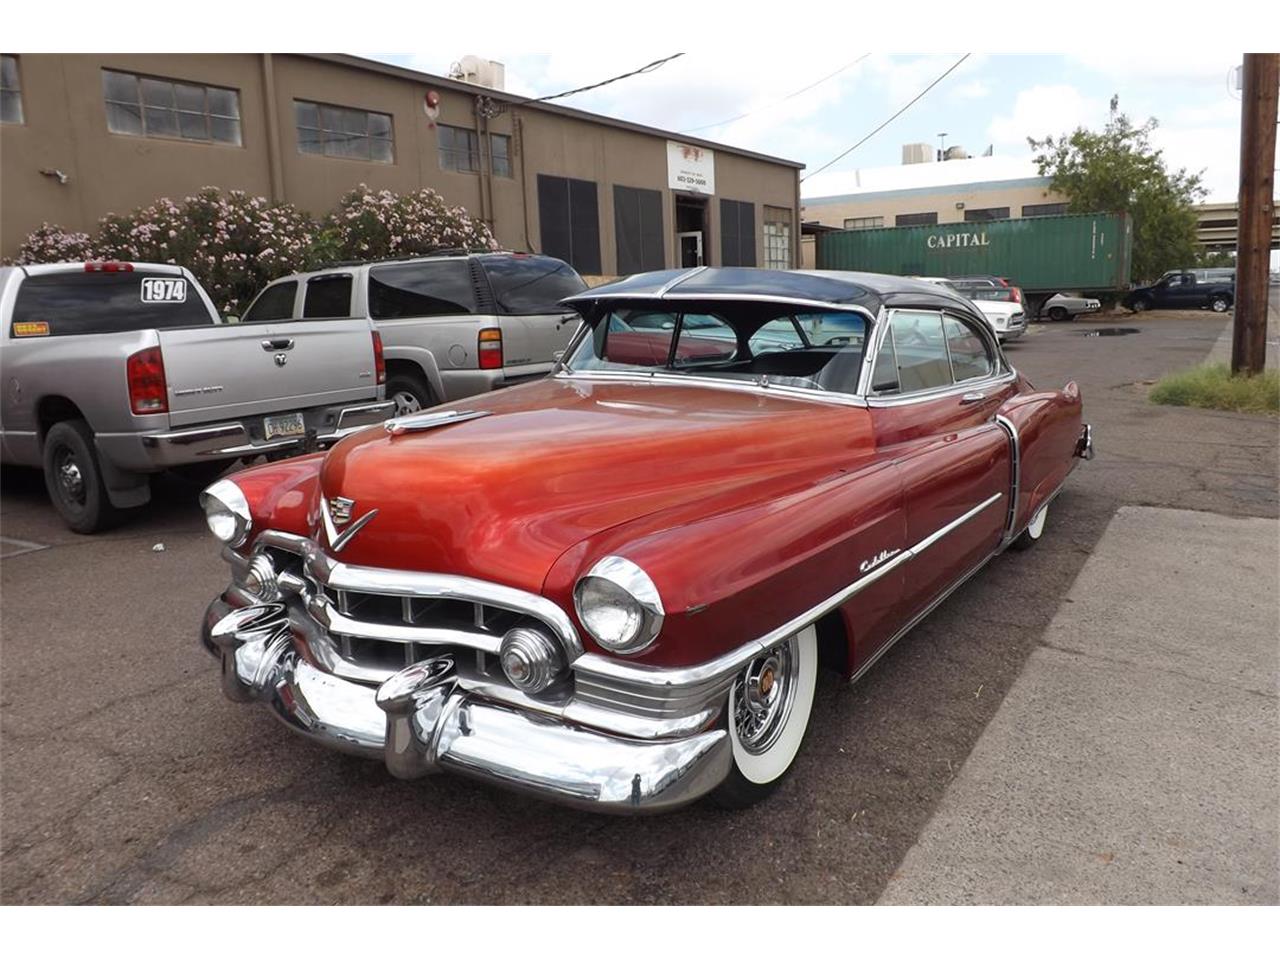 For Sale: 1950 Cadillac Coupe in Phoenix, Arizona.